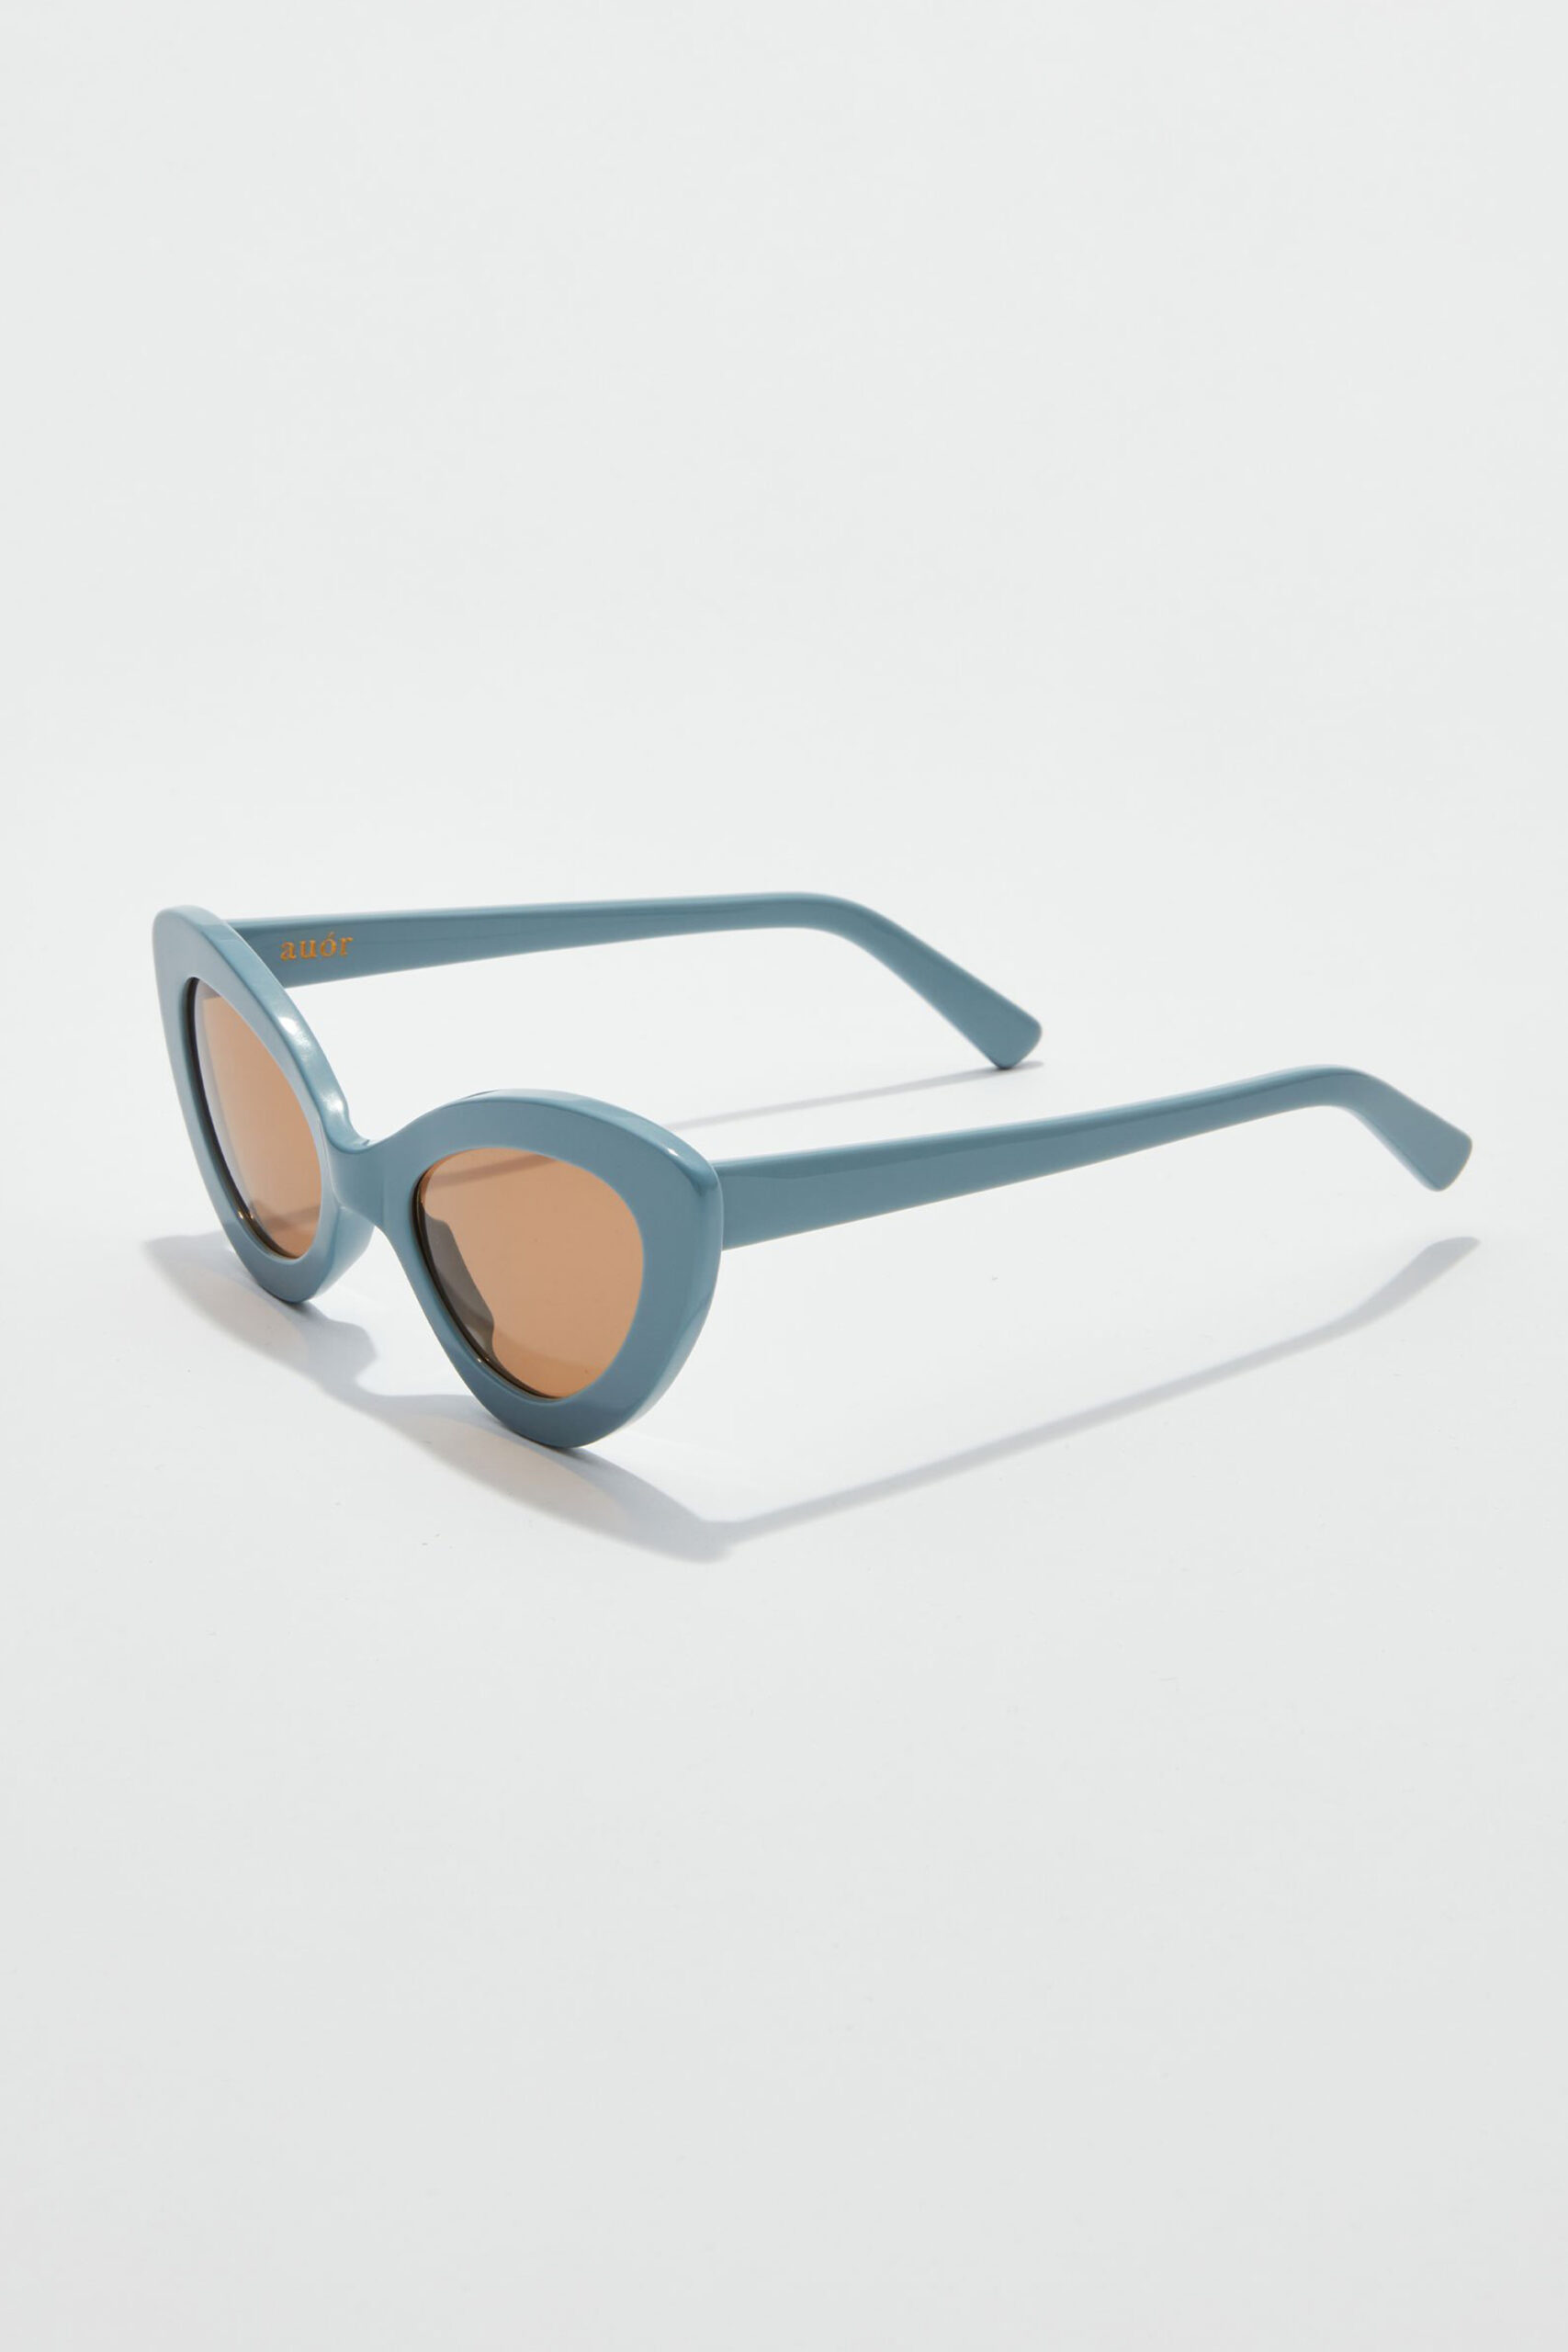 bassike-auor-sunglasses-frenchblue3_2000x_OPT-scaled